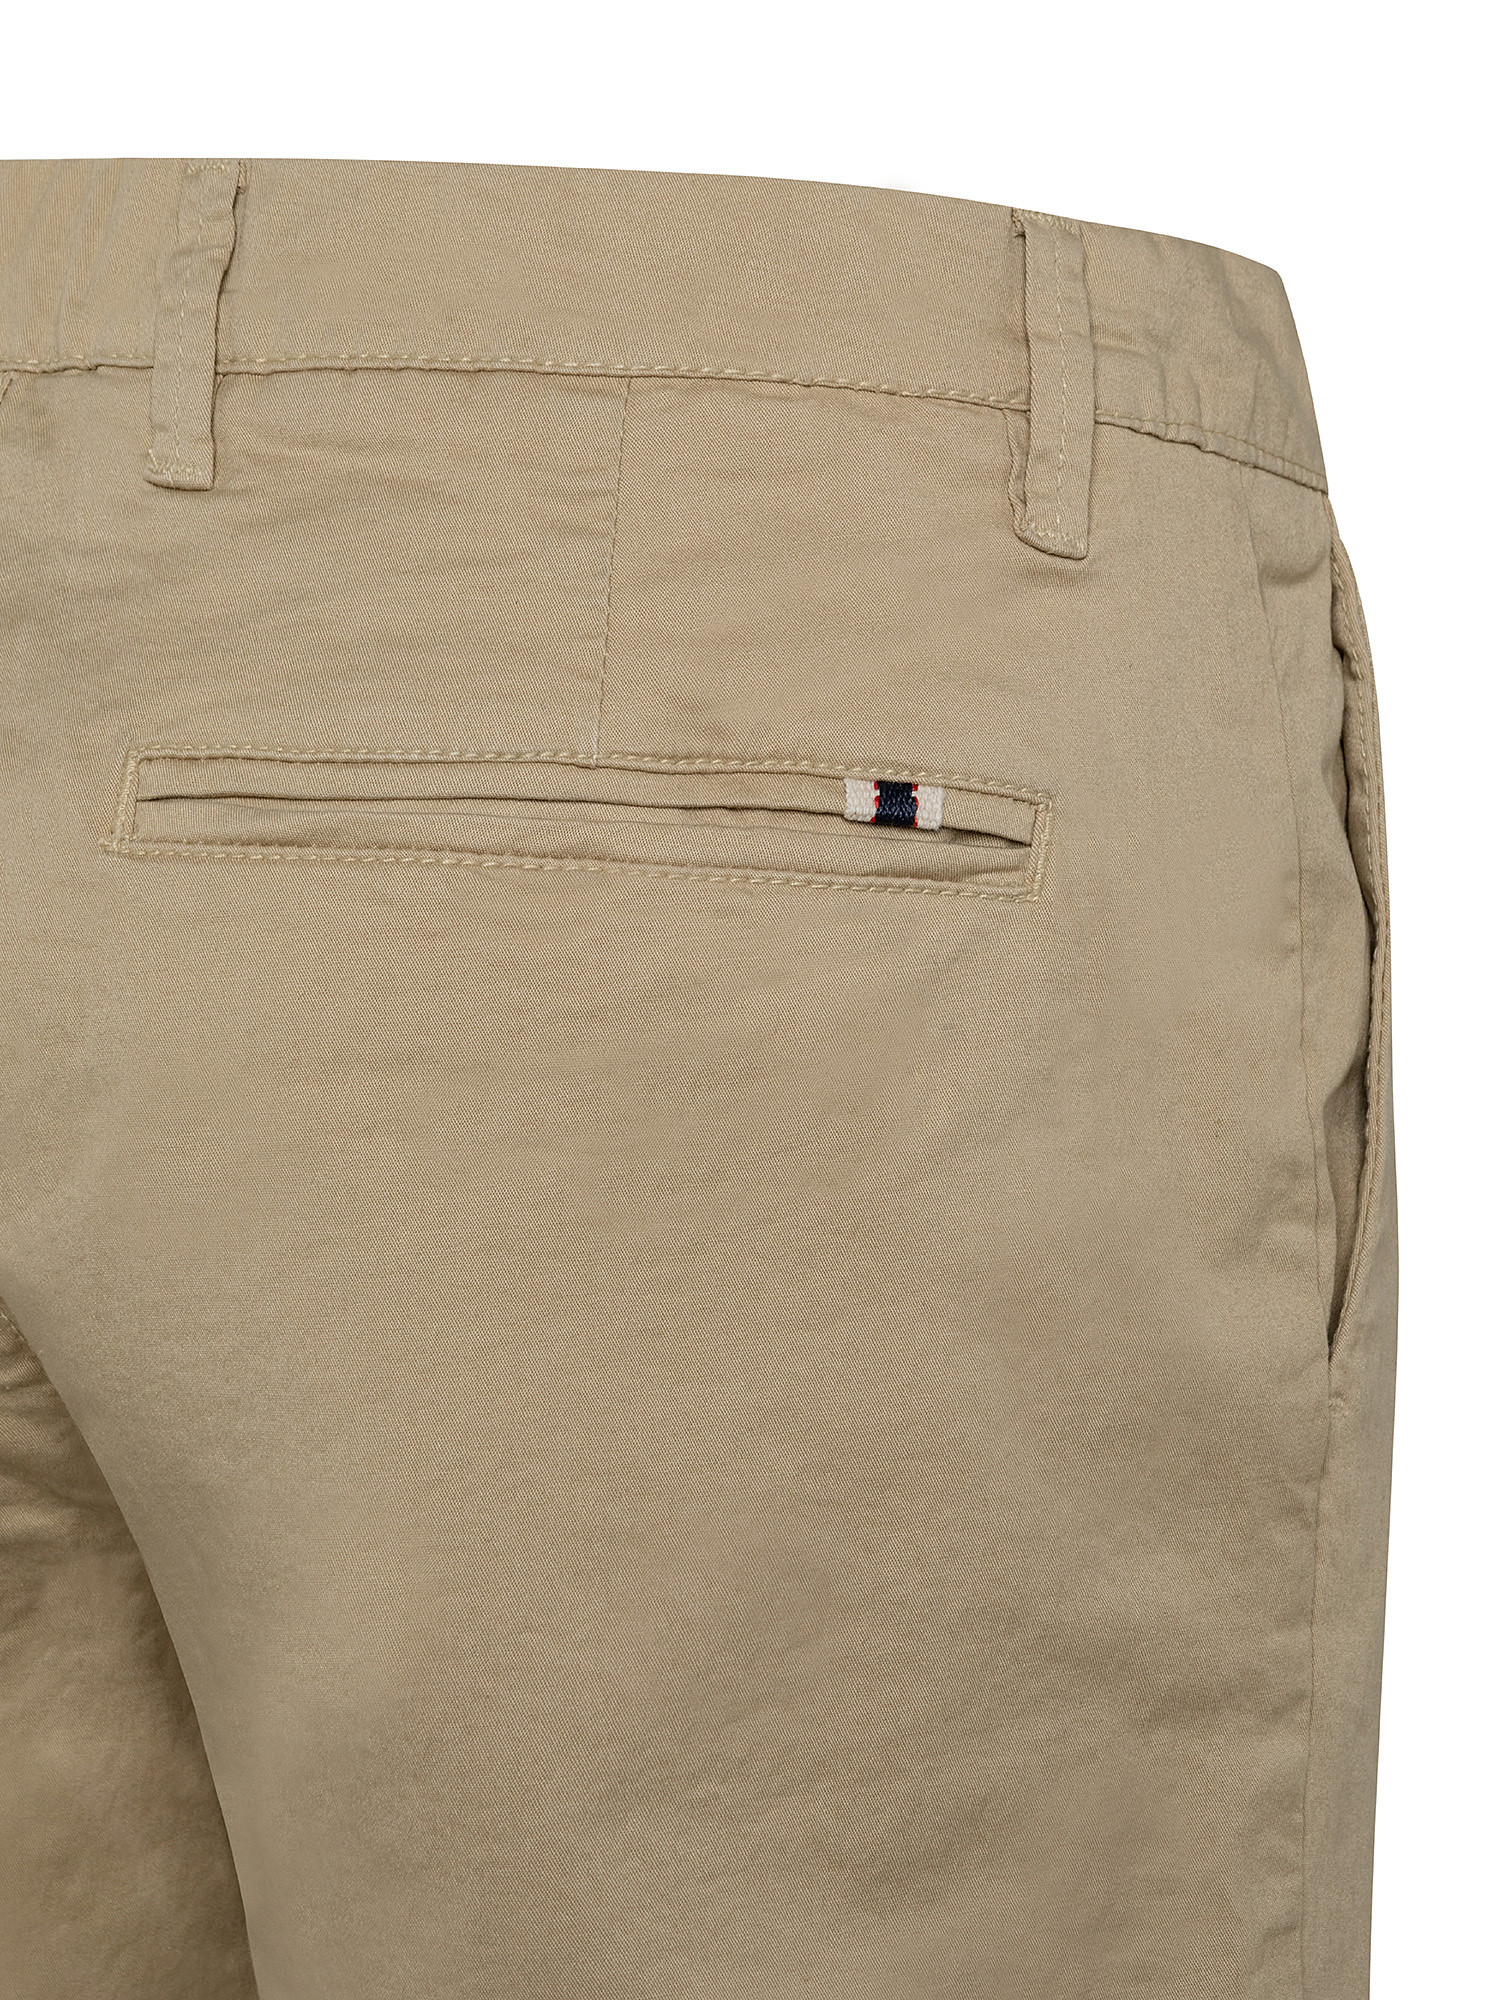 Pantalone chinos cotone stretch, Beige, large